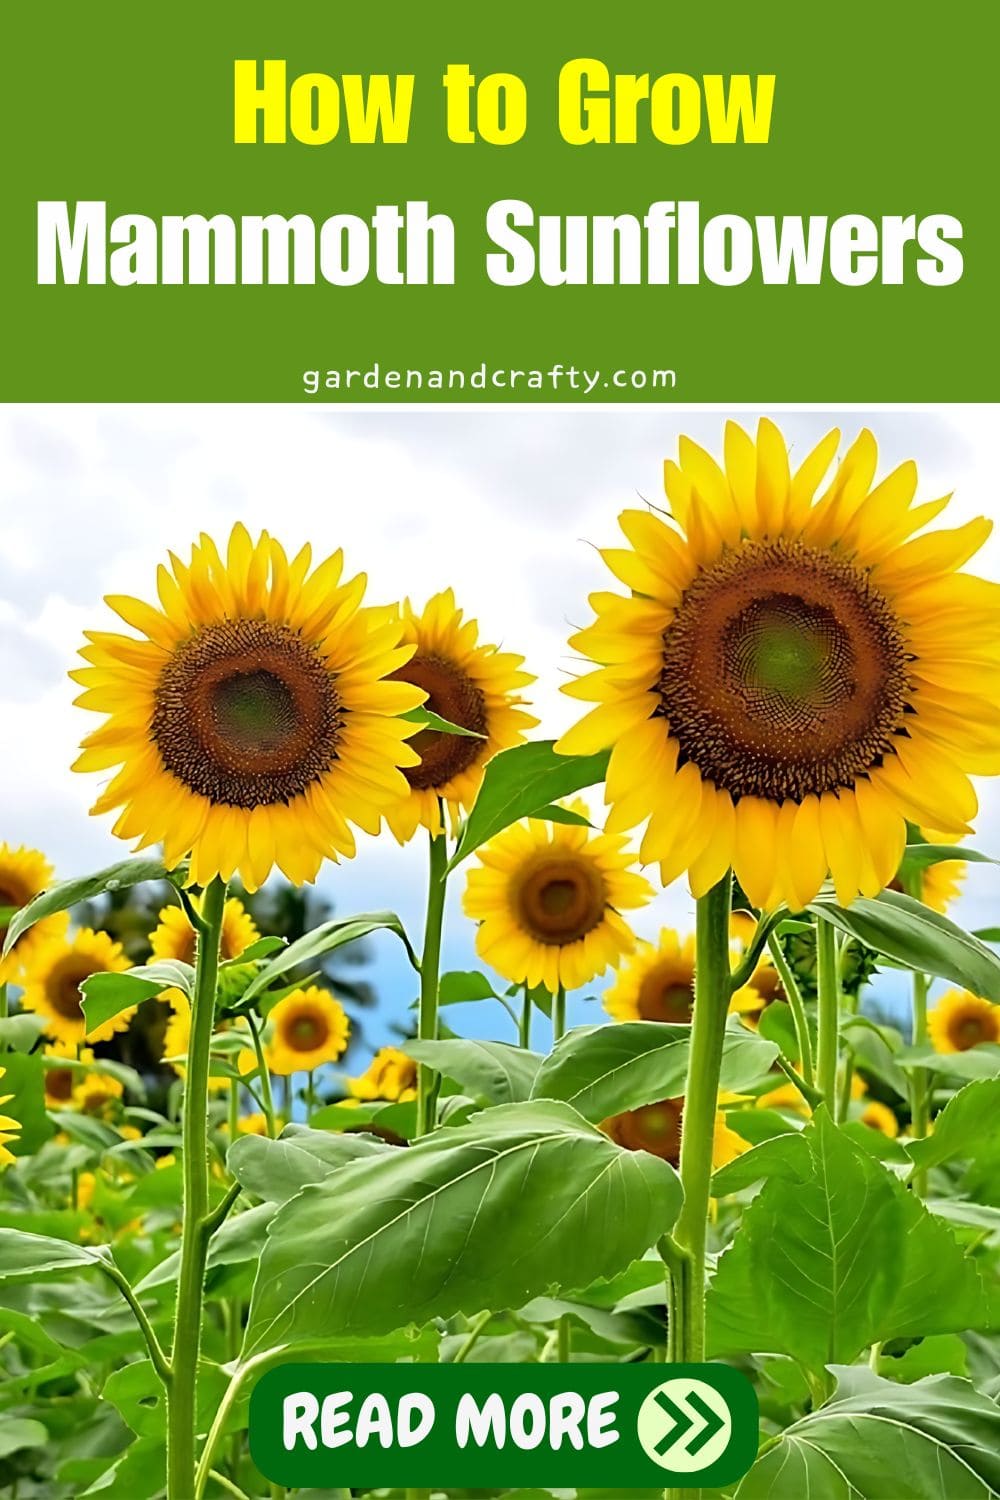 How to Grow Mammoth Sunflowers